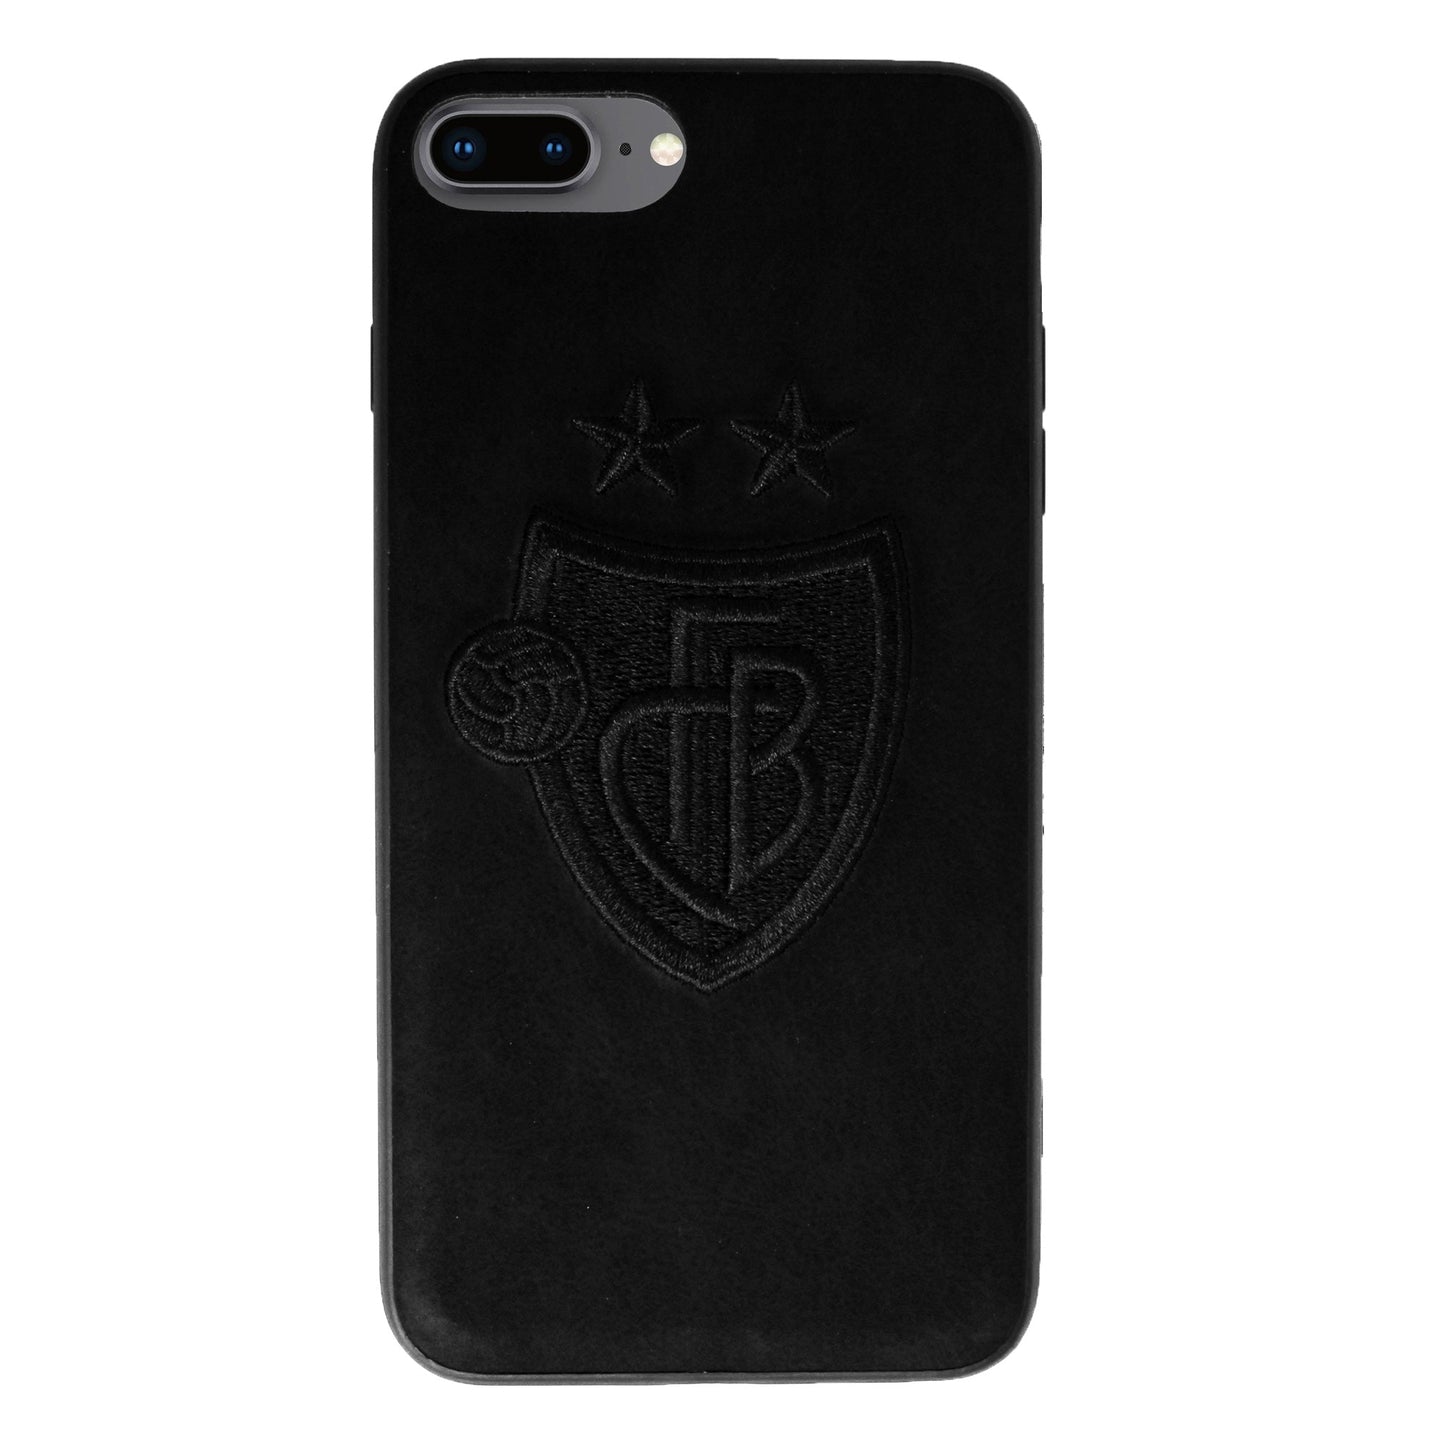 FCB Black Stitch Case for iPhone 6/6S/7/8 Plus